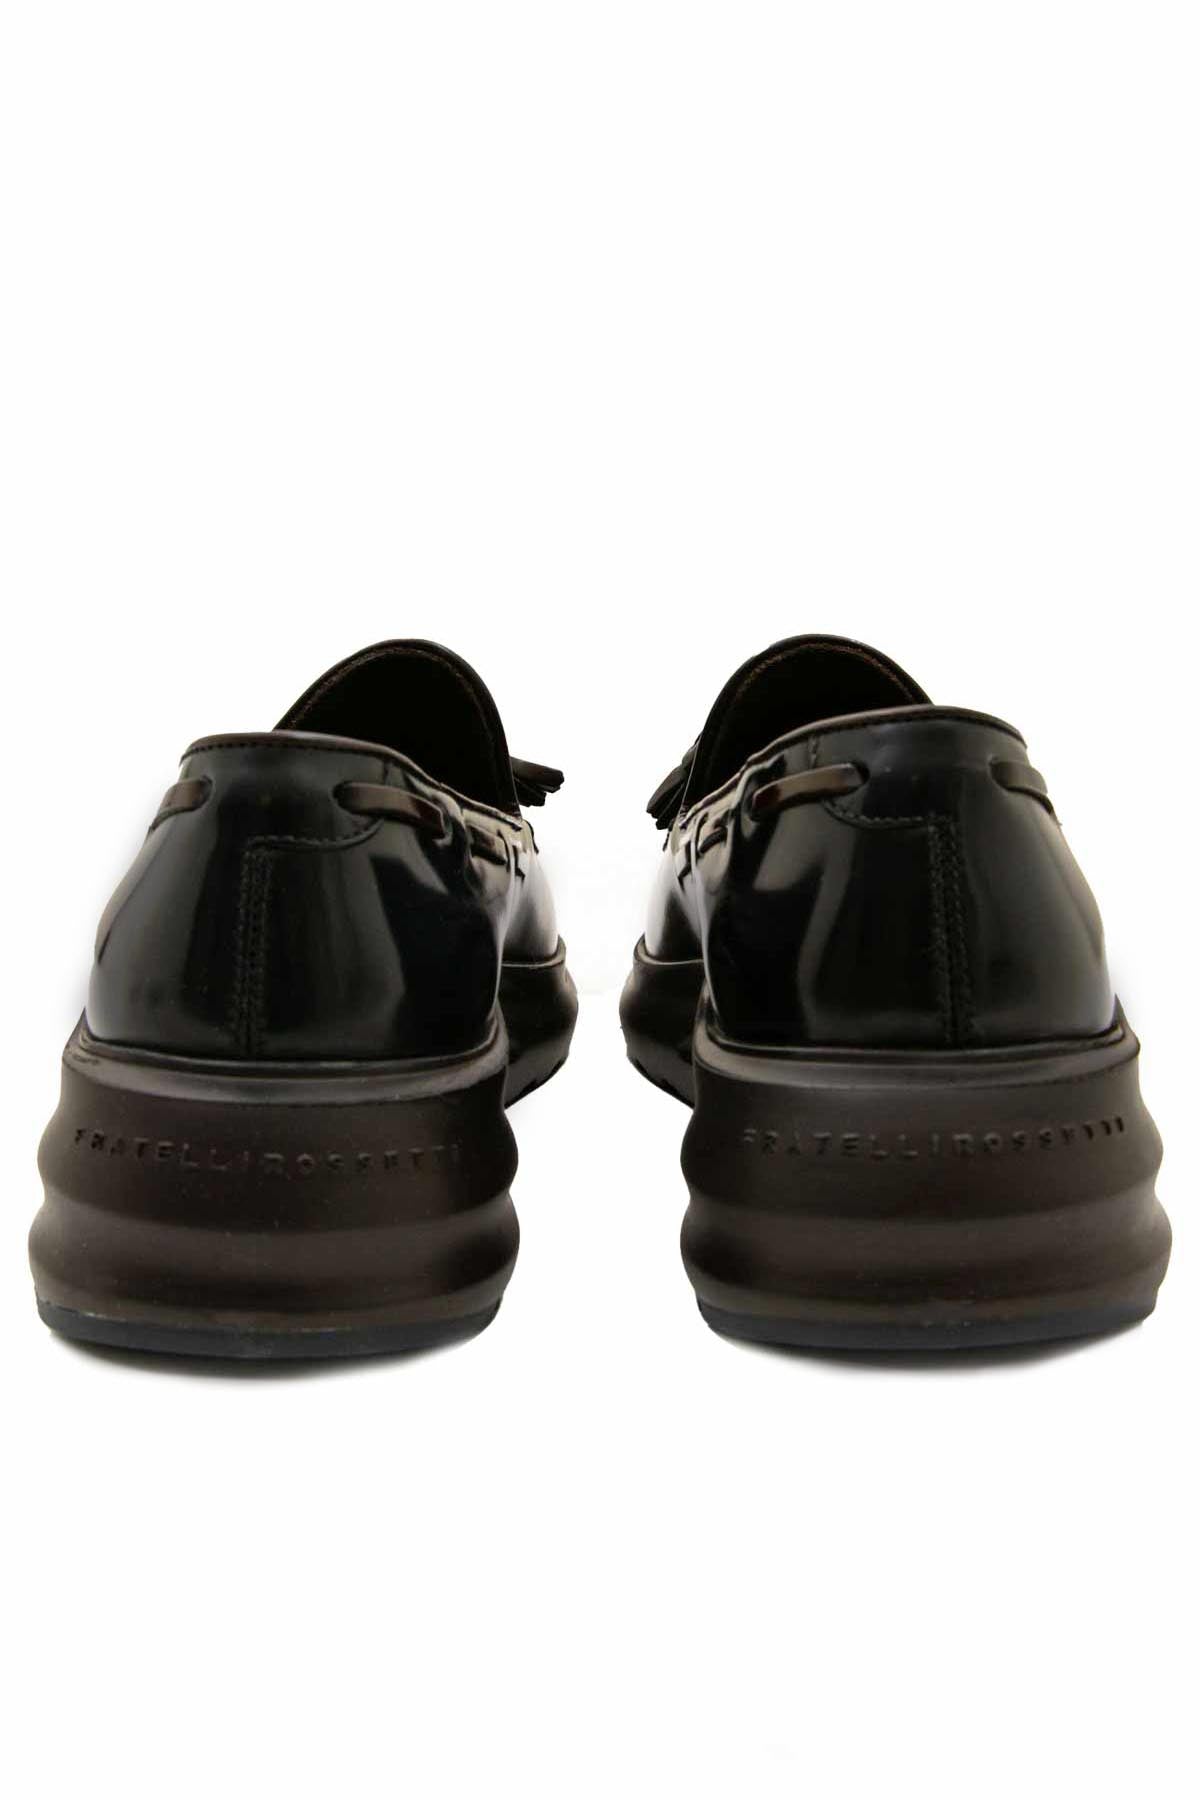 Fratelli Rossetti Püsküllü Loafer Deri Ayakkabı-Libas Trendy Fashion Store